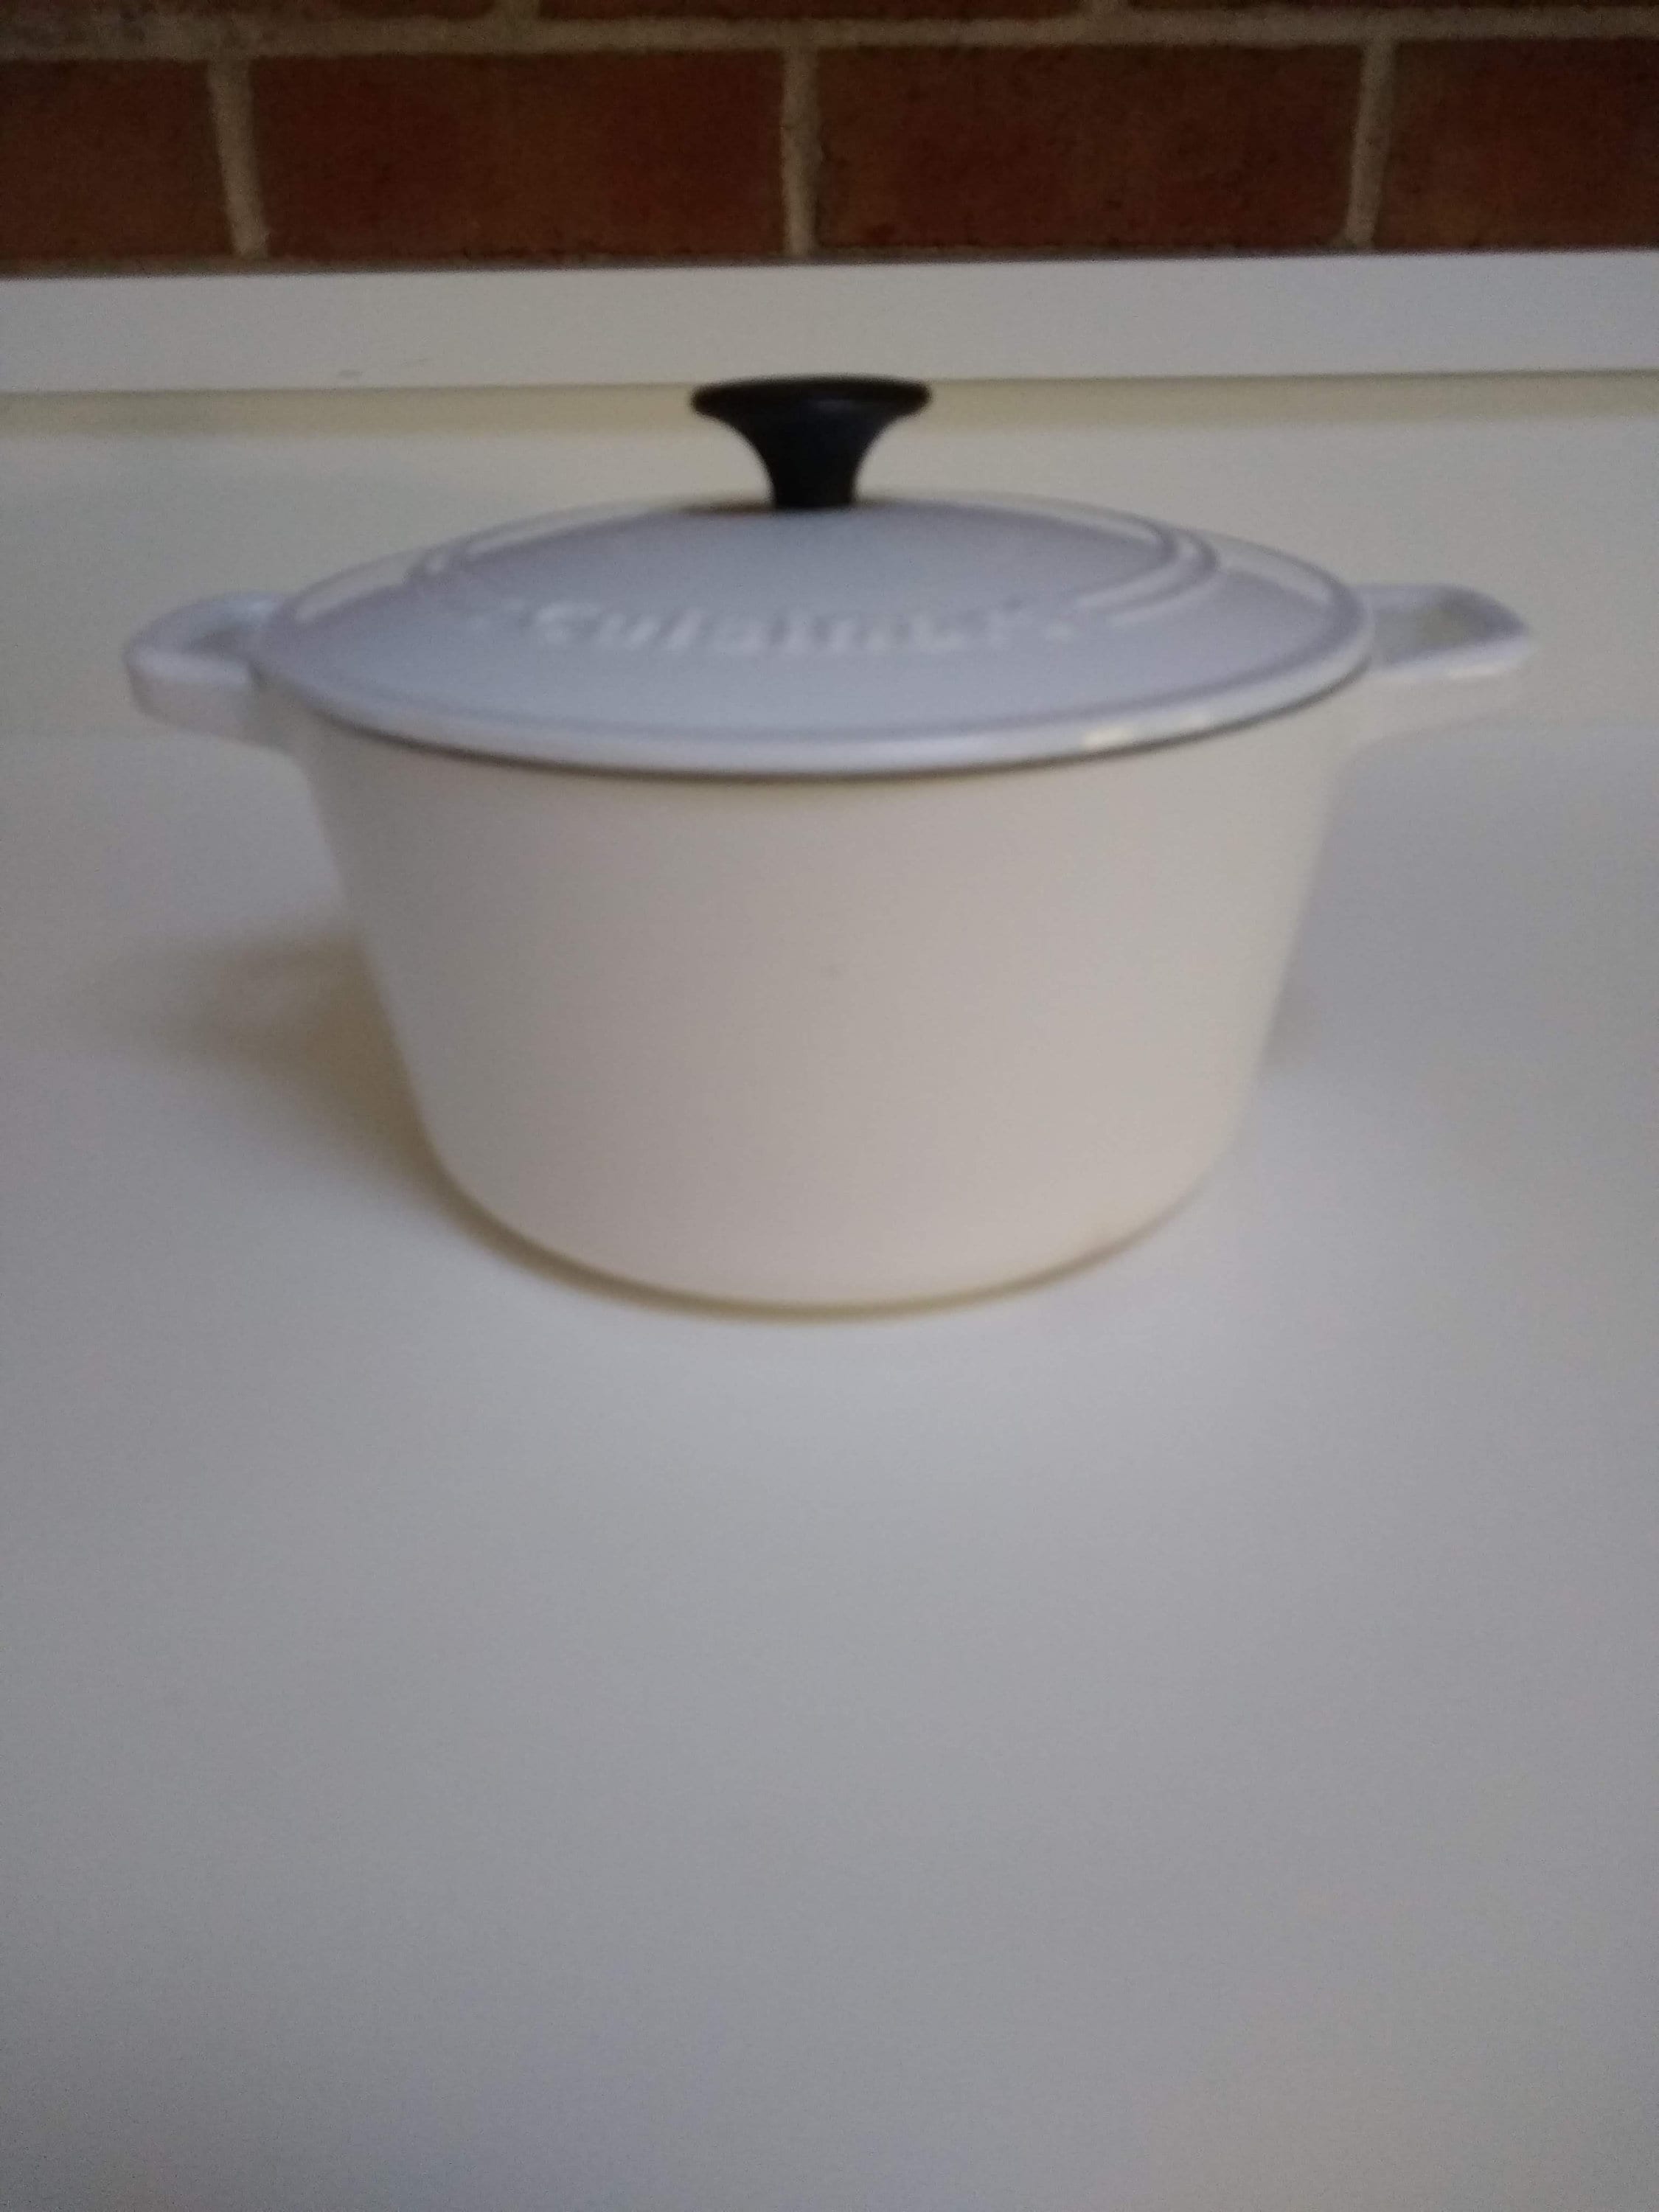 Cuisinart White Enamel Cast Iron Pot 1.5 Quart Baker with Lid Used - Good  condit